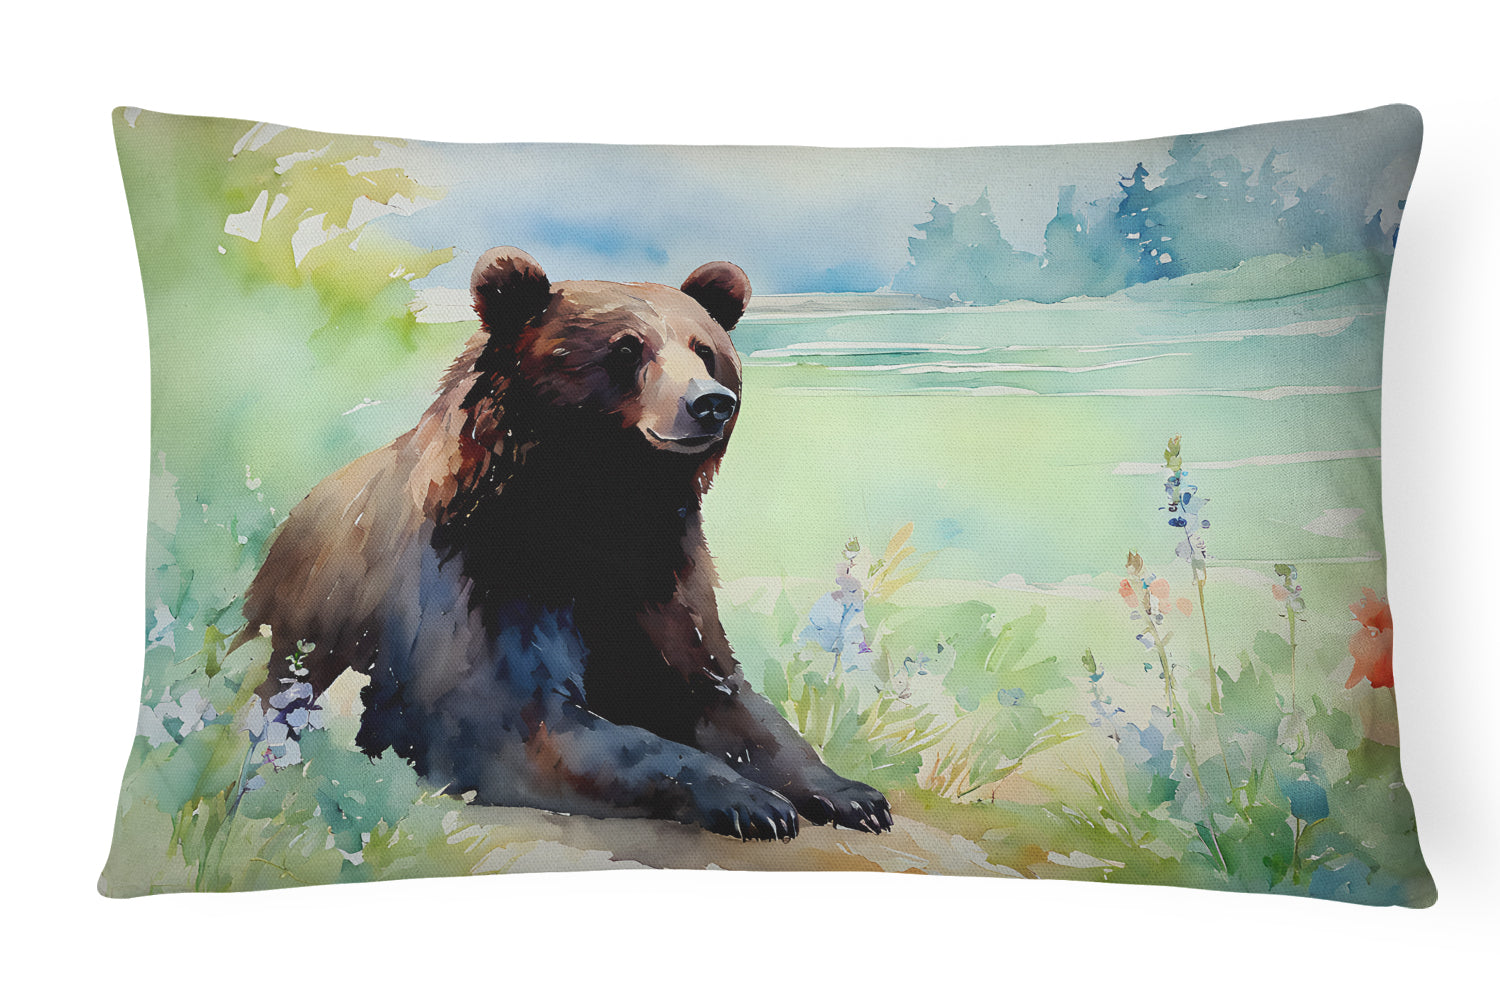 Buy this American Black Bear Throw Pillow